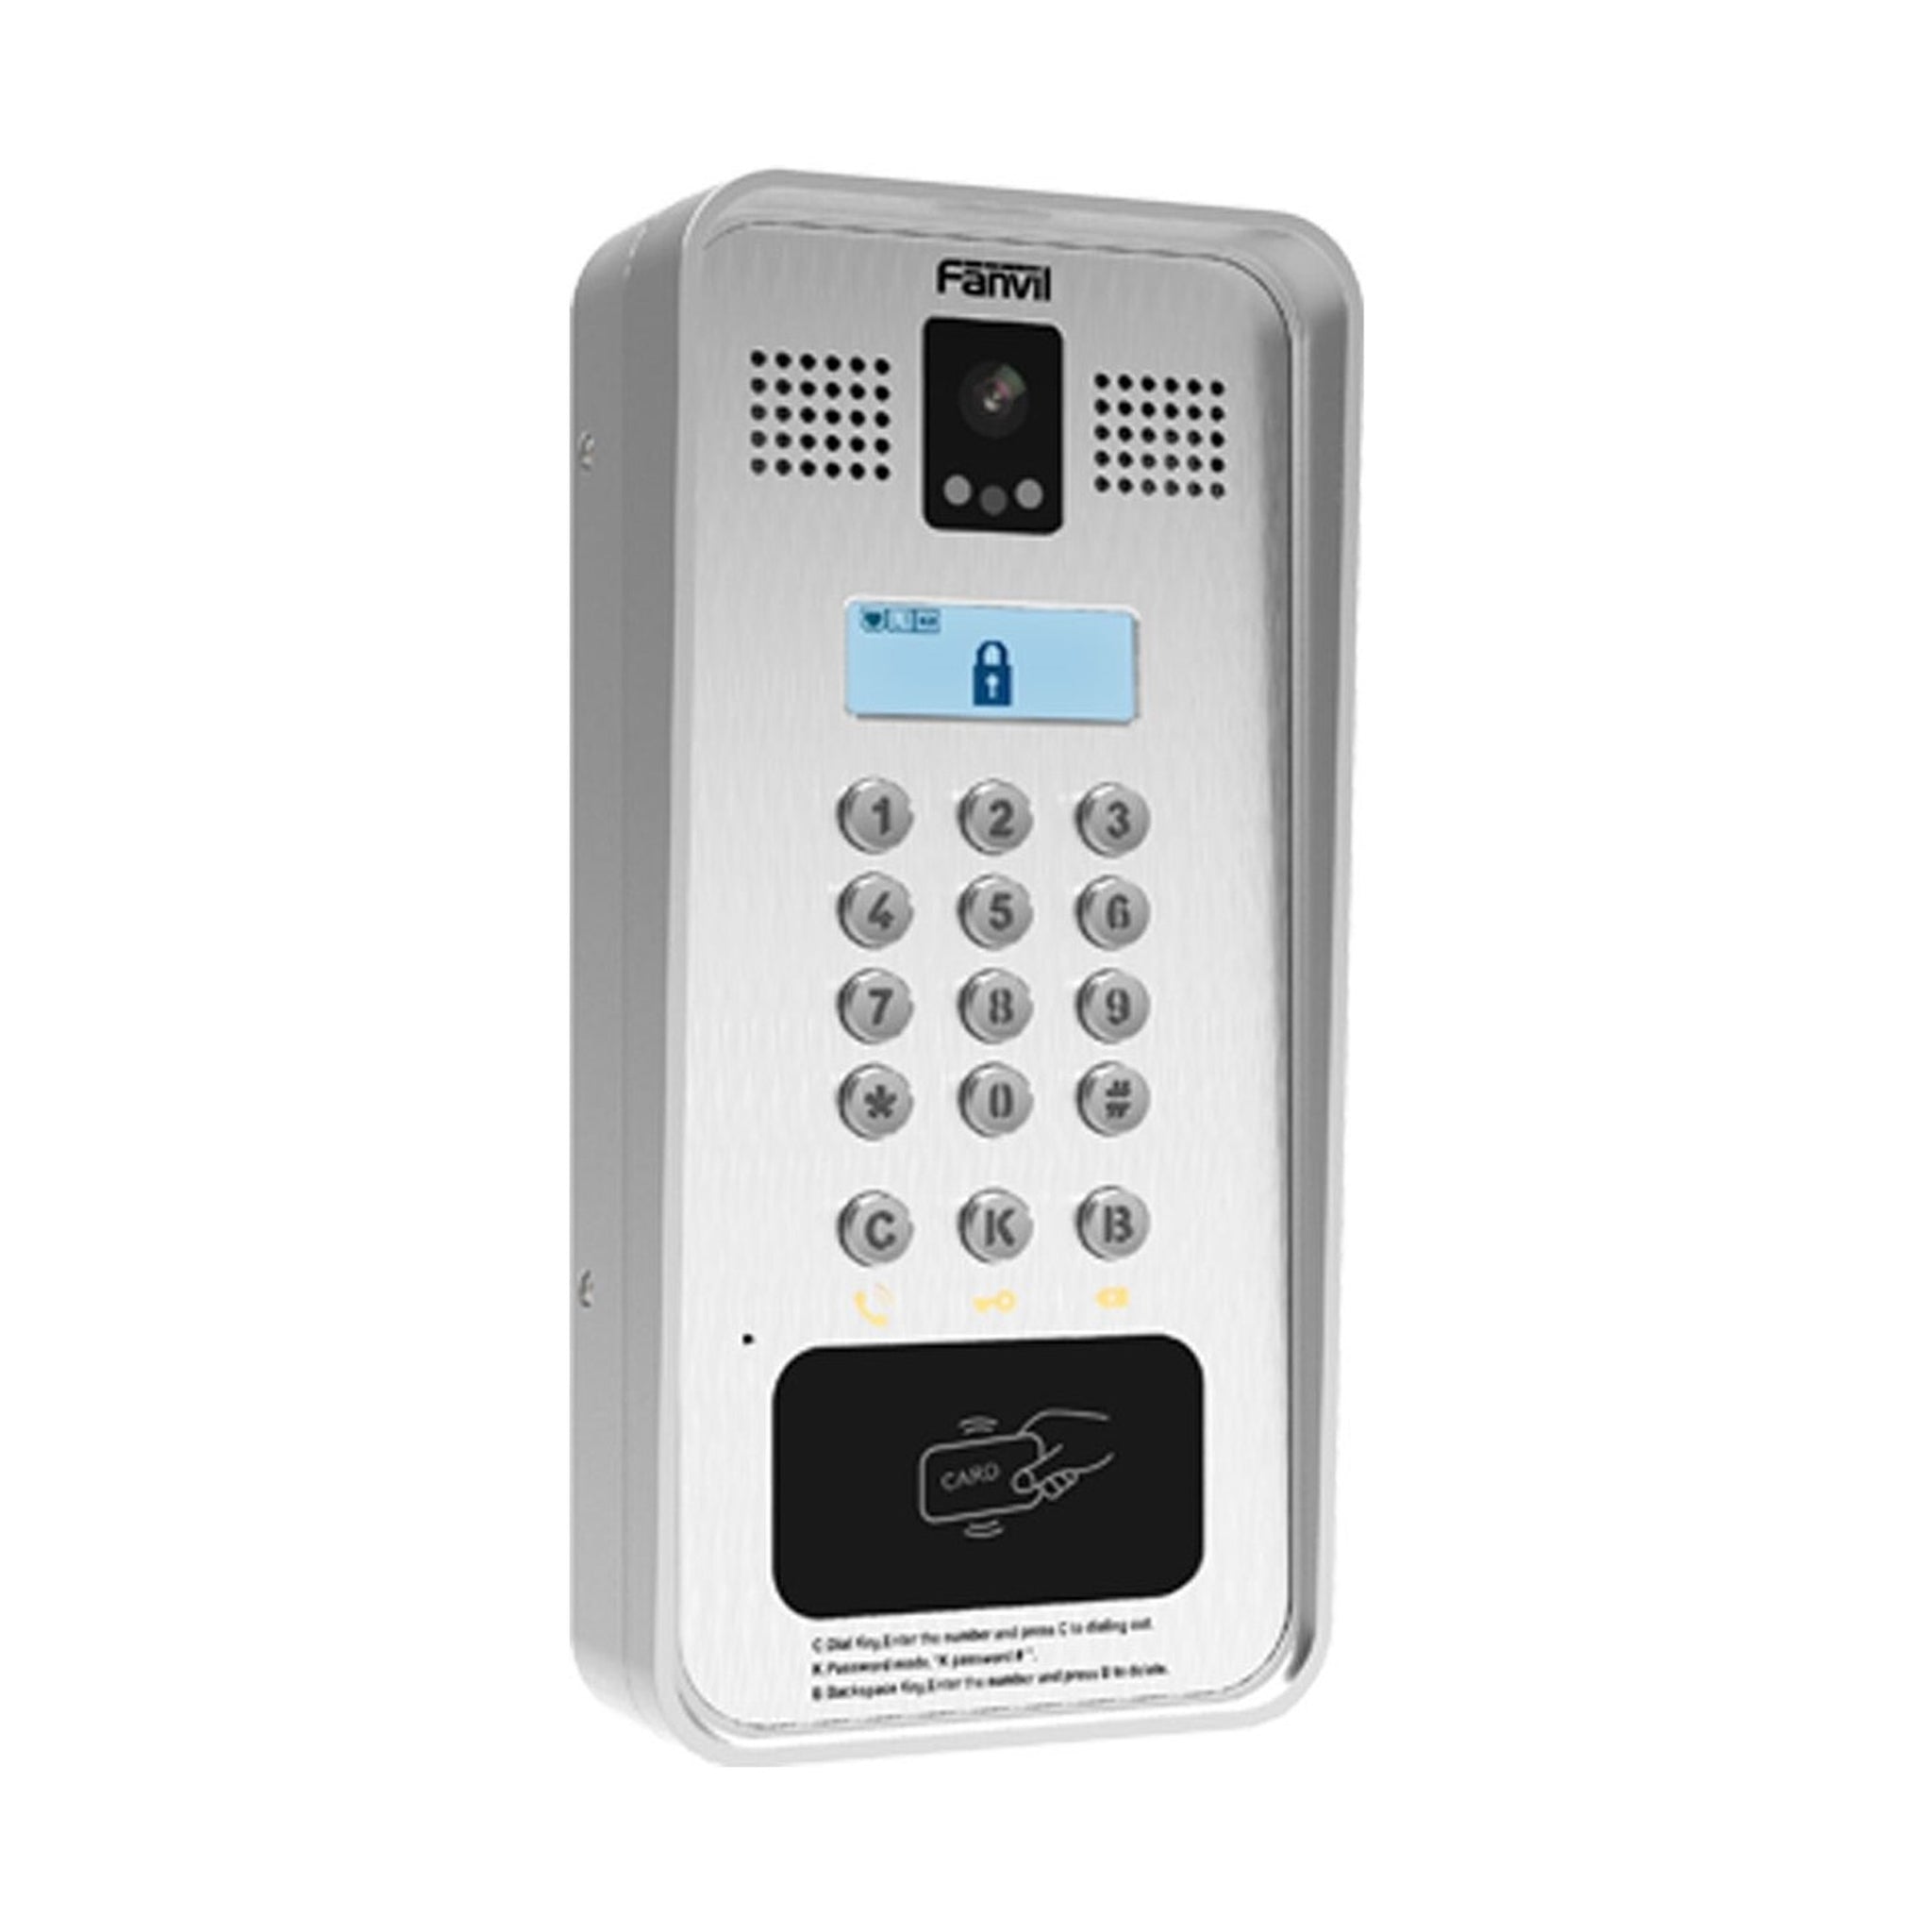 Fanvil I33V - All-in-One SIP Video Door-phone I33V | AL-VoIP Store